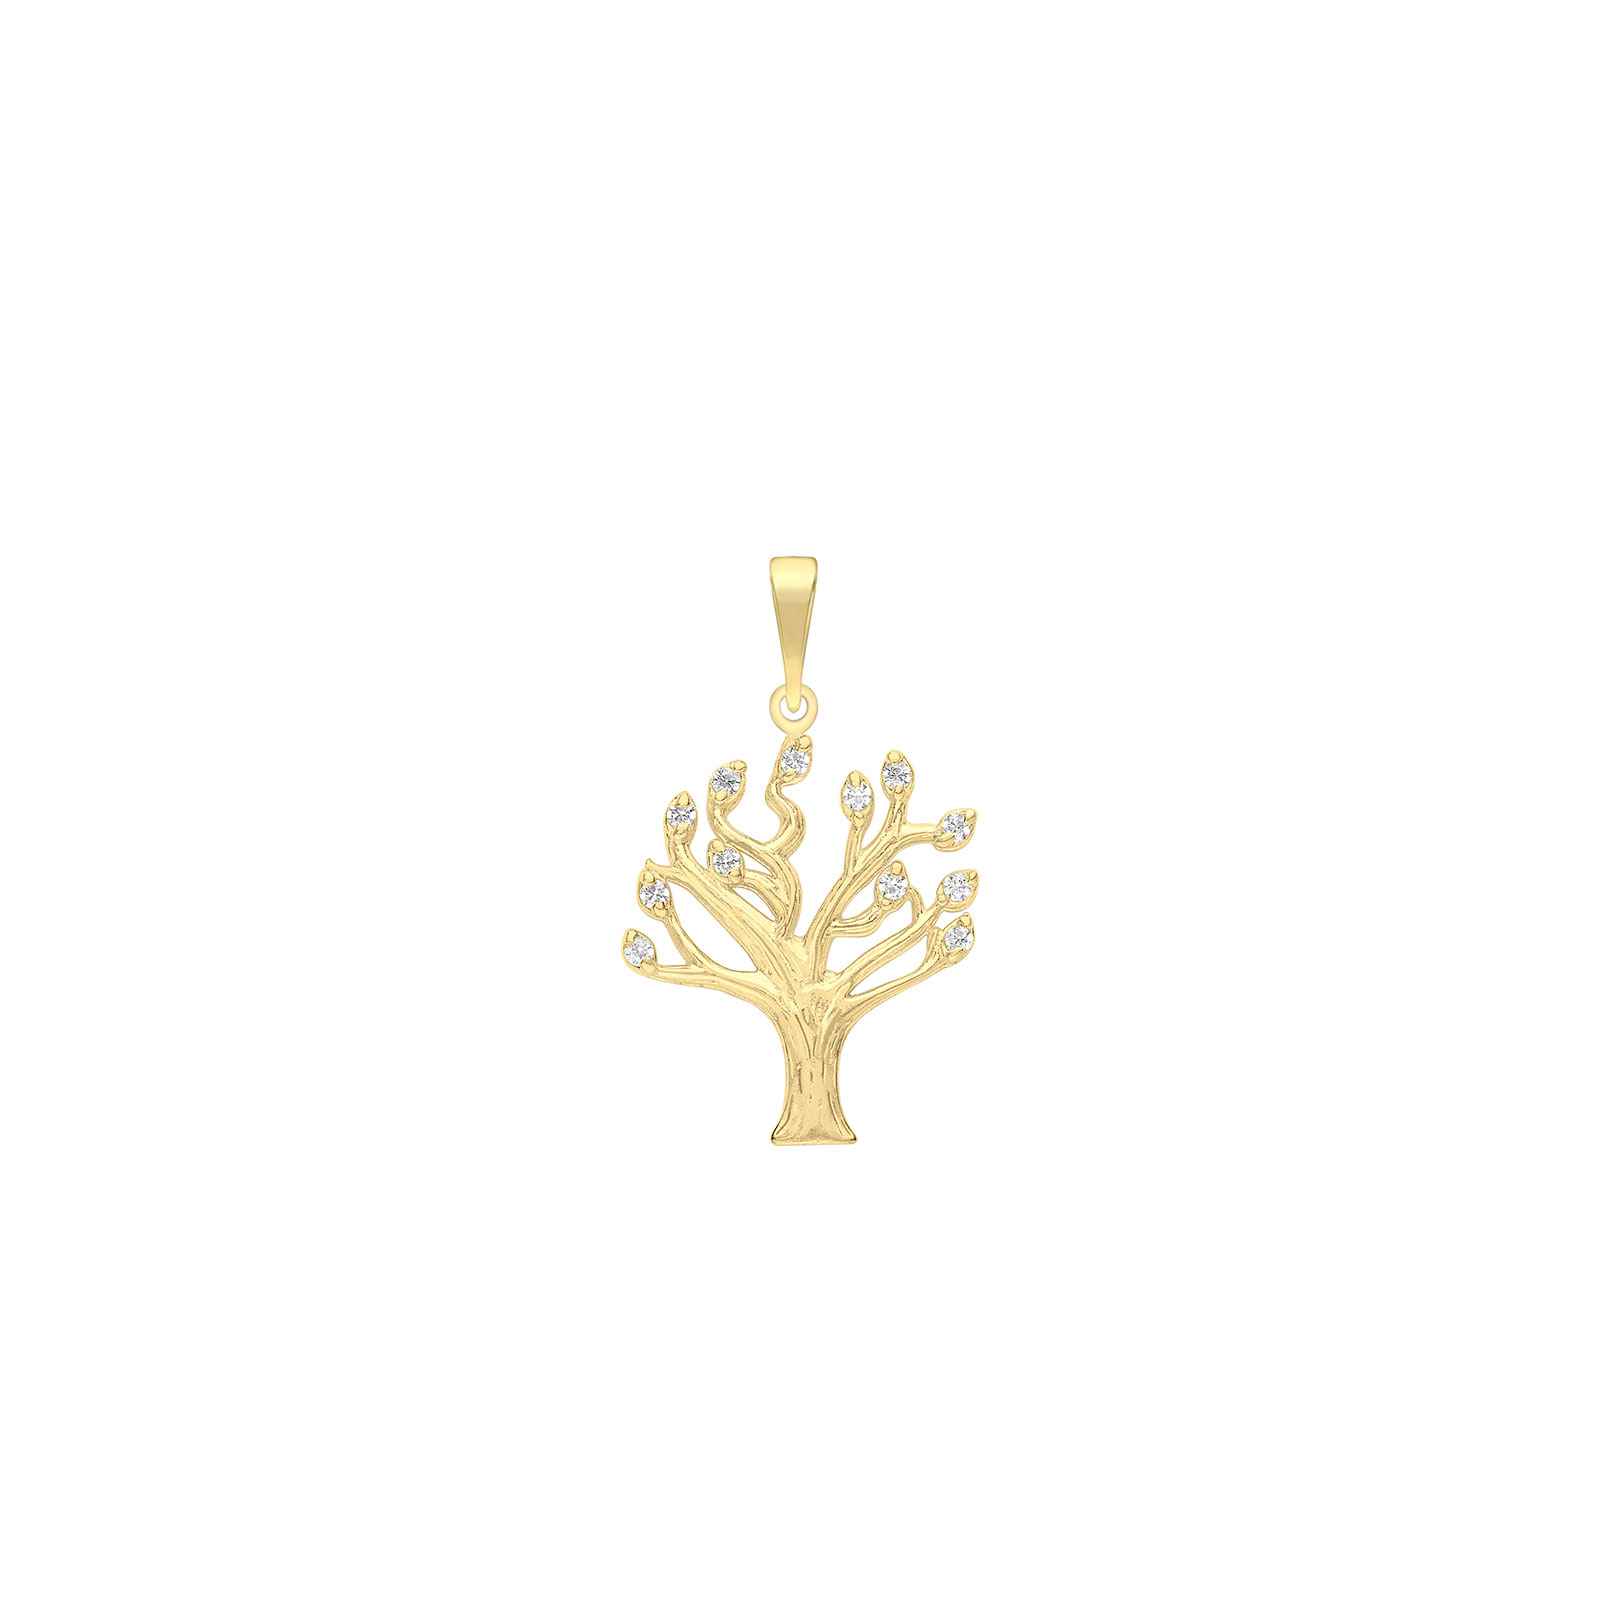 Berlock 9k guld -Tree of Life